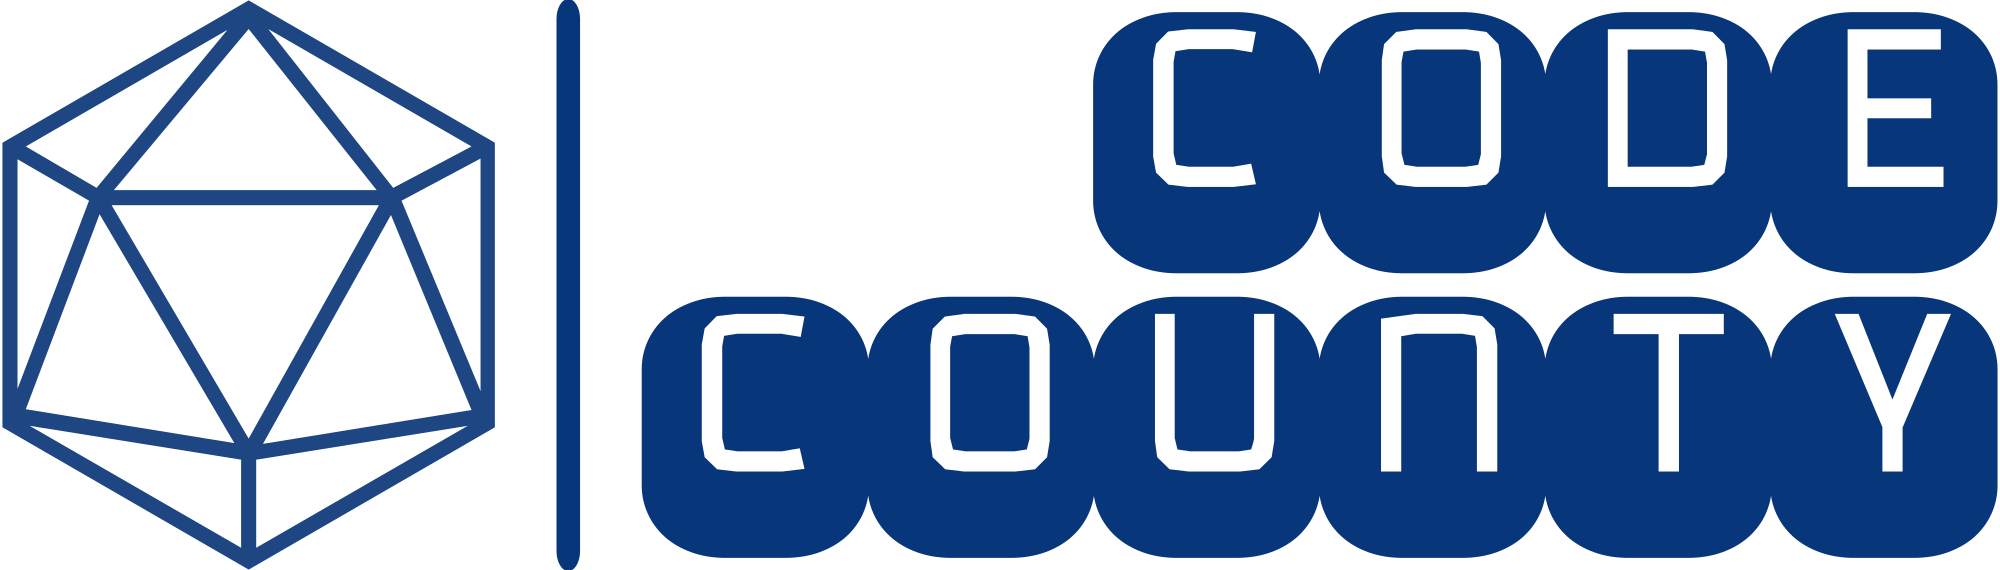 code county logo